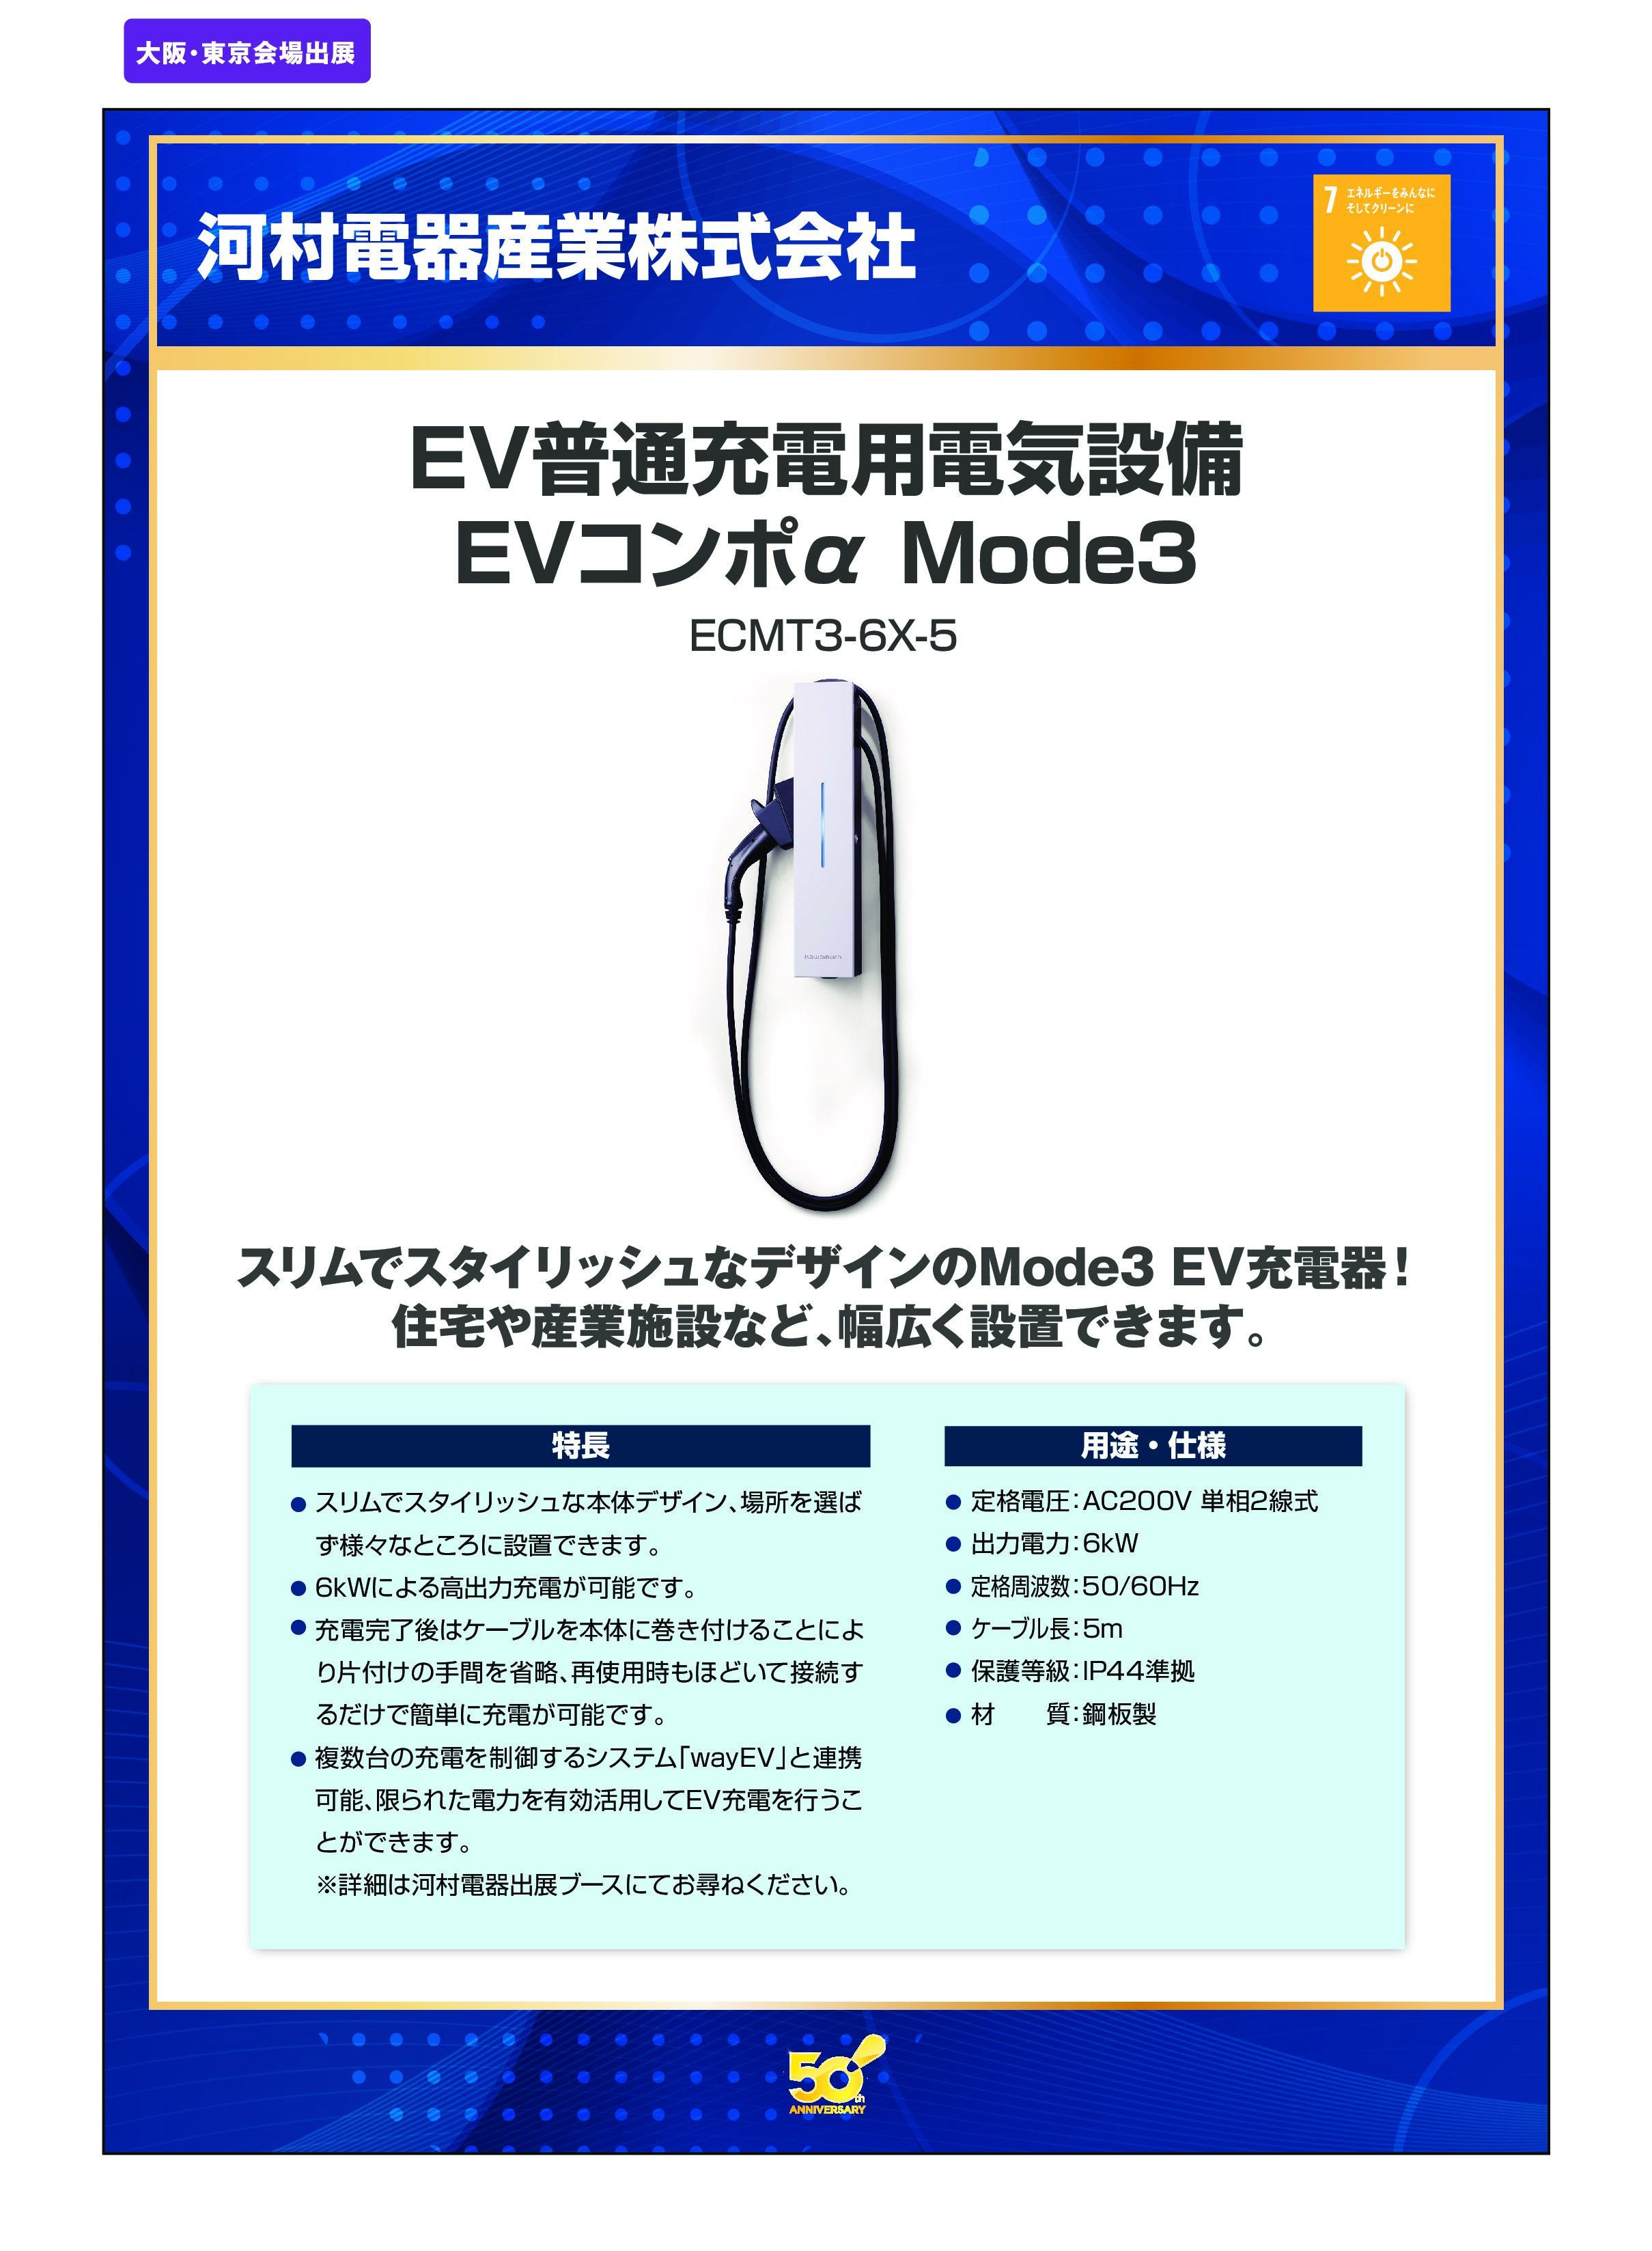 「EV普通充電用電気設備 EVコンポα Mode3」河村電器産業株式会社の画像